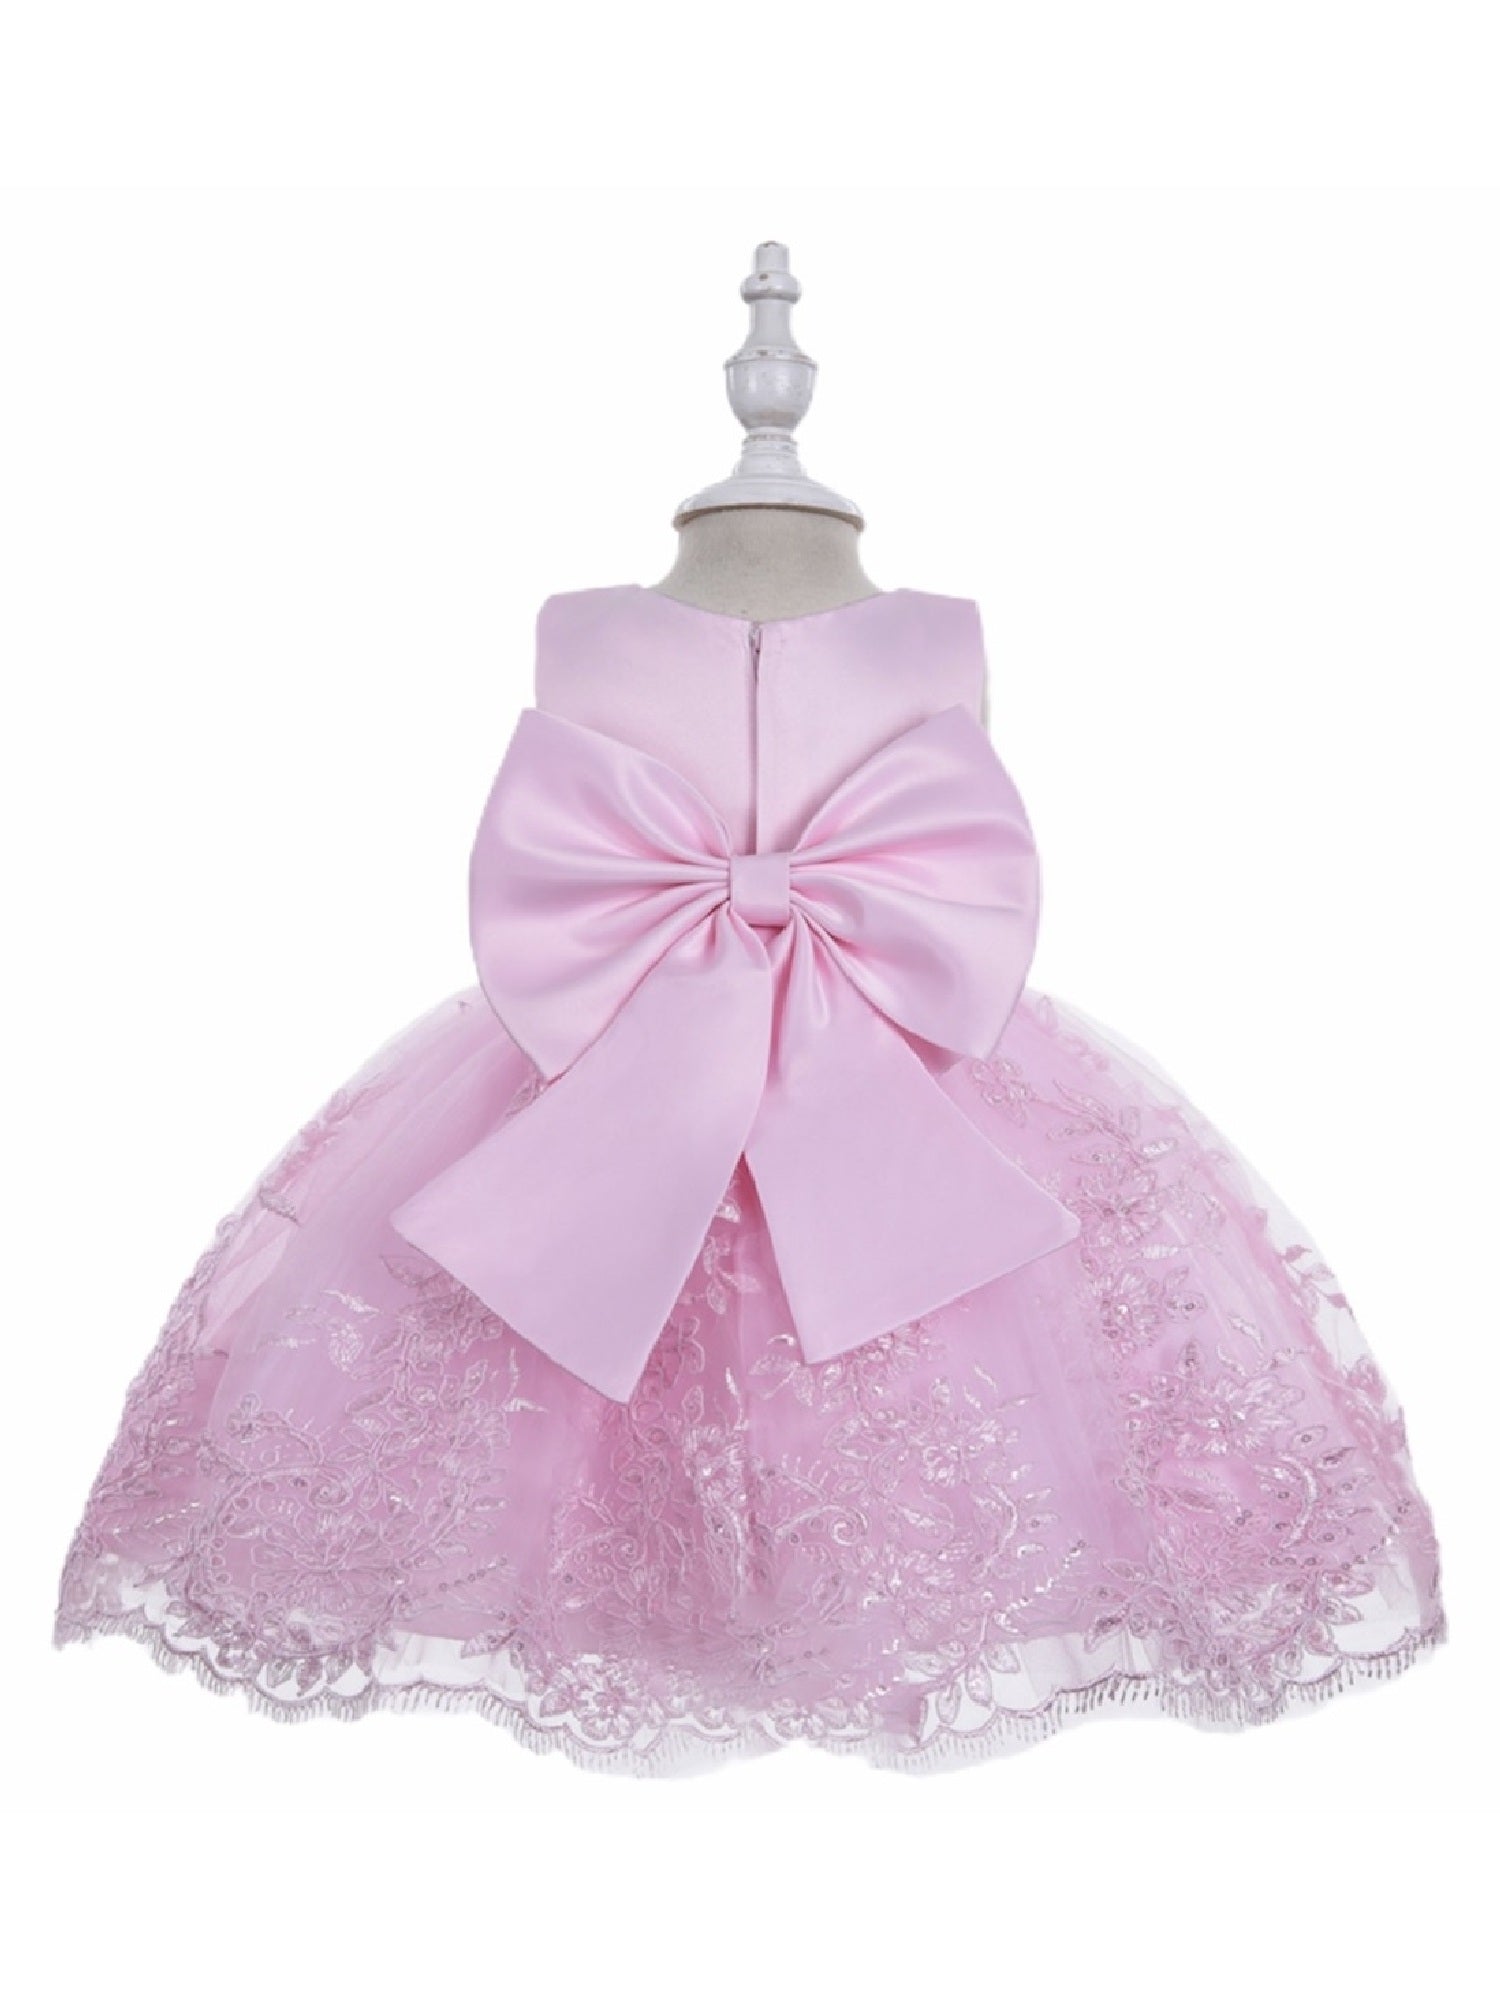 Little Girls Pink Rhinestone Embellished Sash Flower Girl Dress 2T-4T